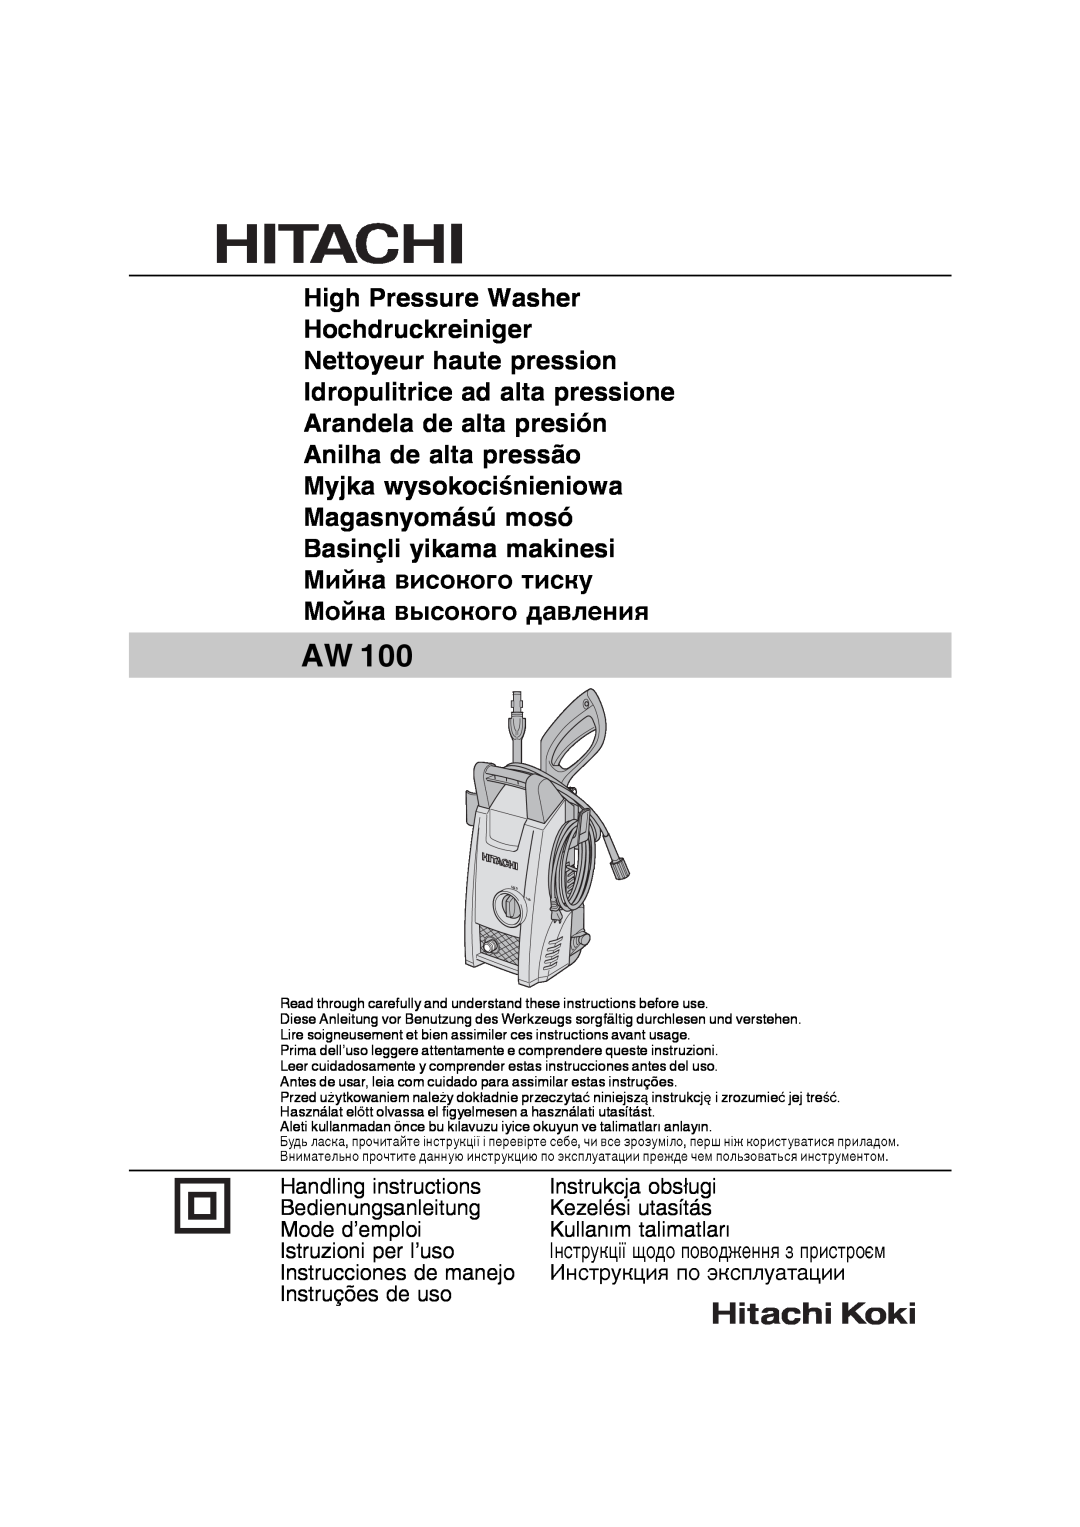 Hitachi AW 100 manual High Pressure Washer Hochdruckreiniger Nettoyeur haute pression, Basinçli yikama makinesi Ma Ma 